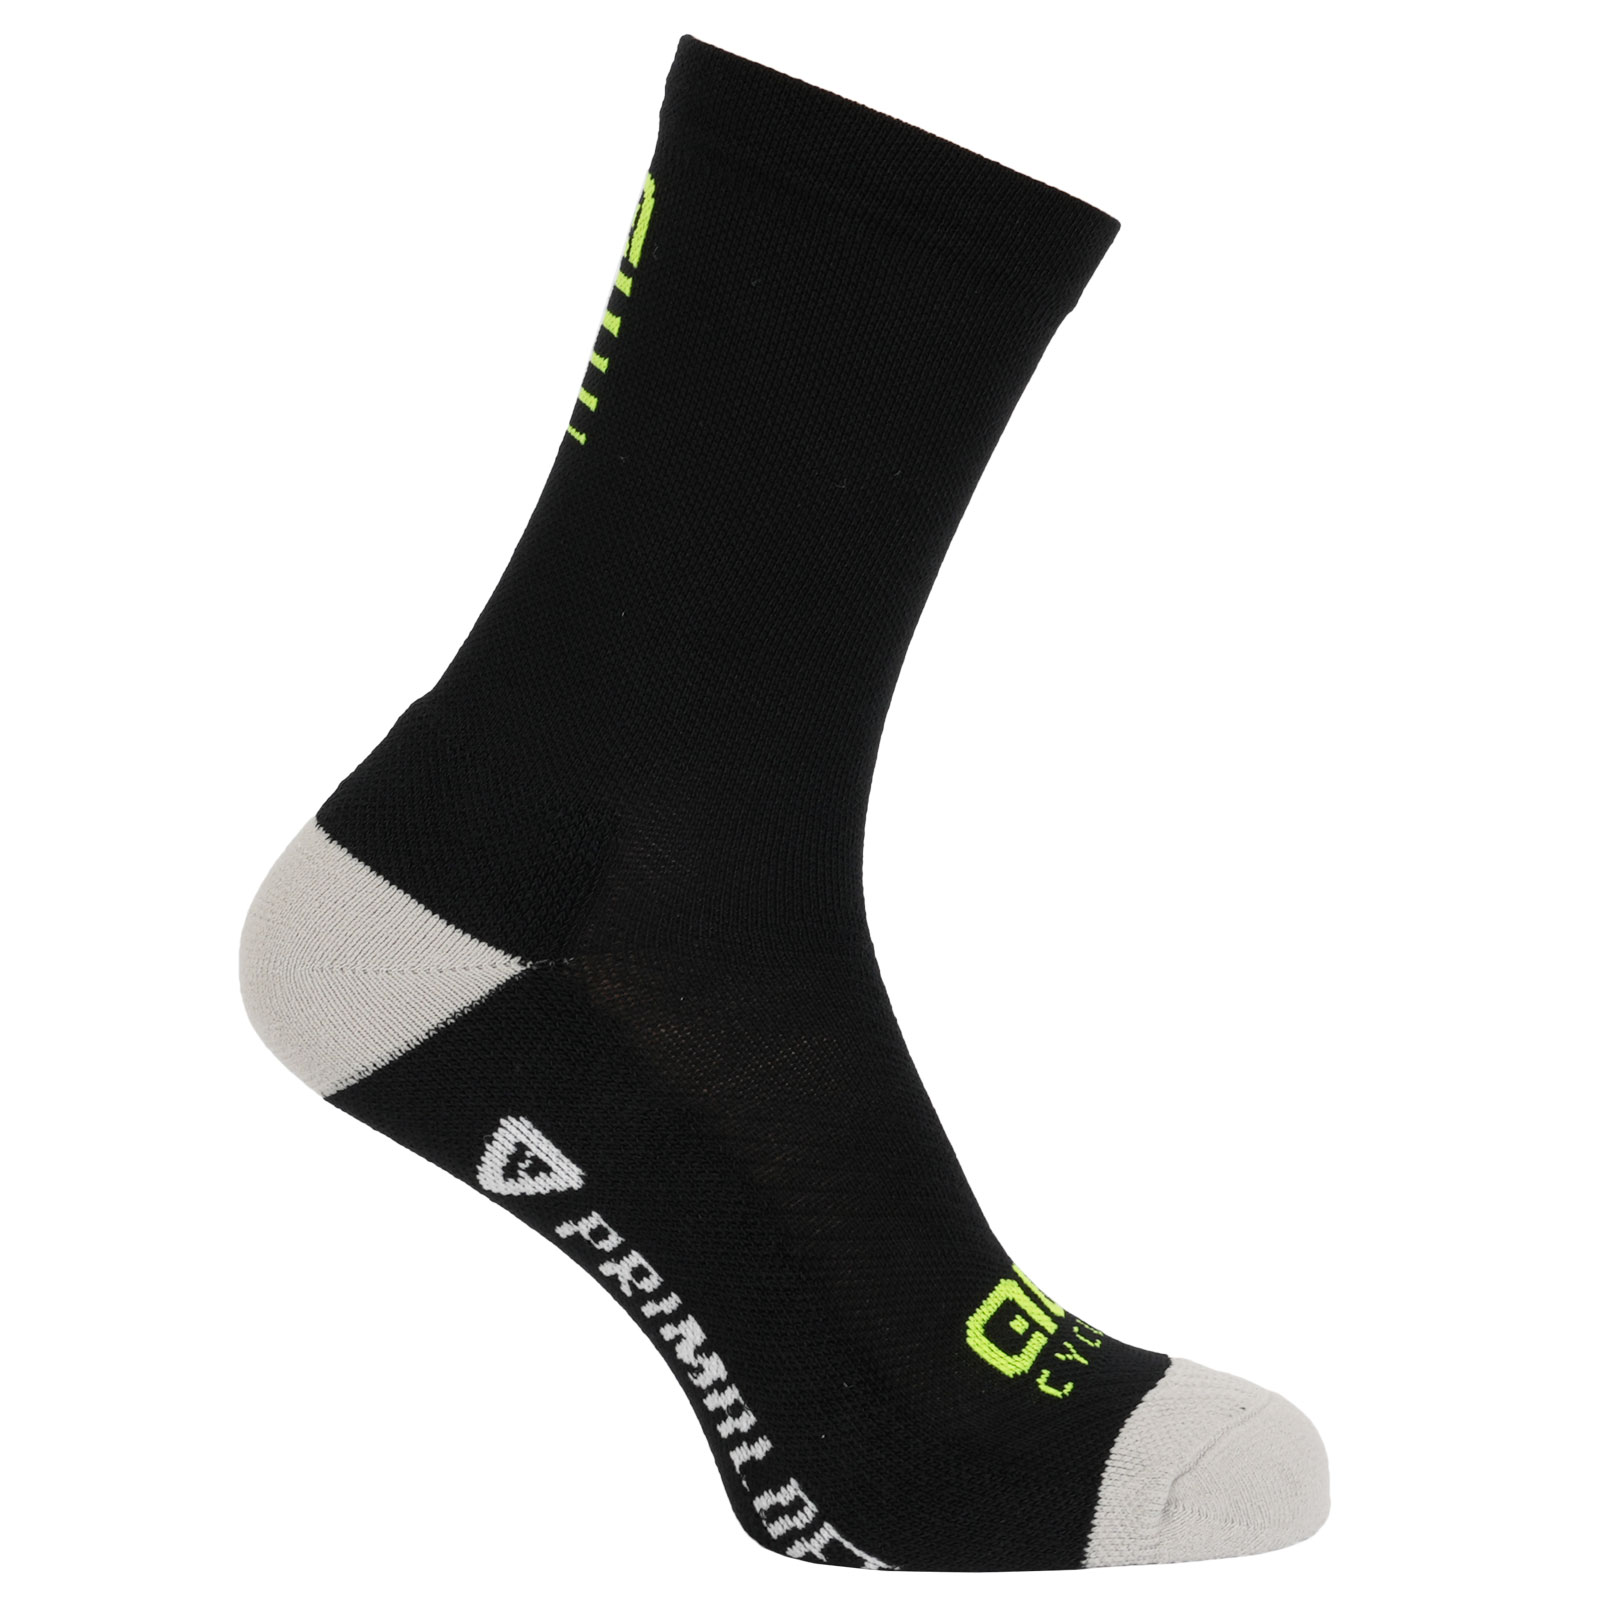 Productfoto van Alé Thermo Primaloft Socks - black/grey